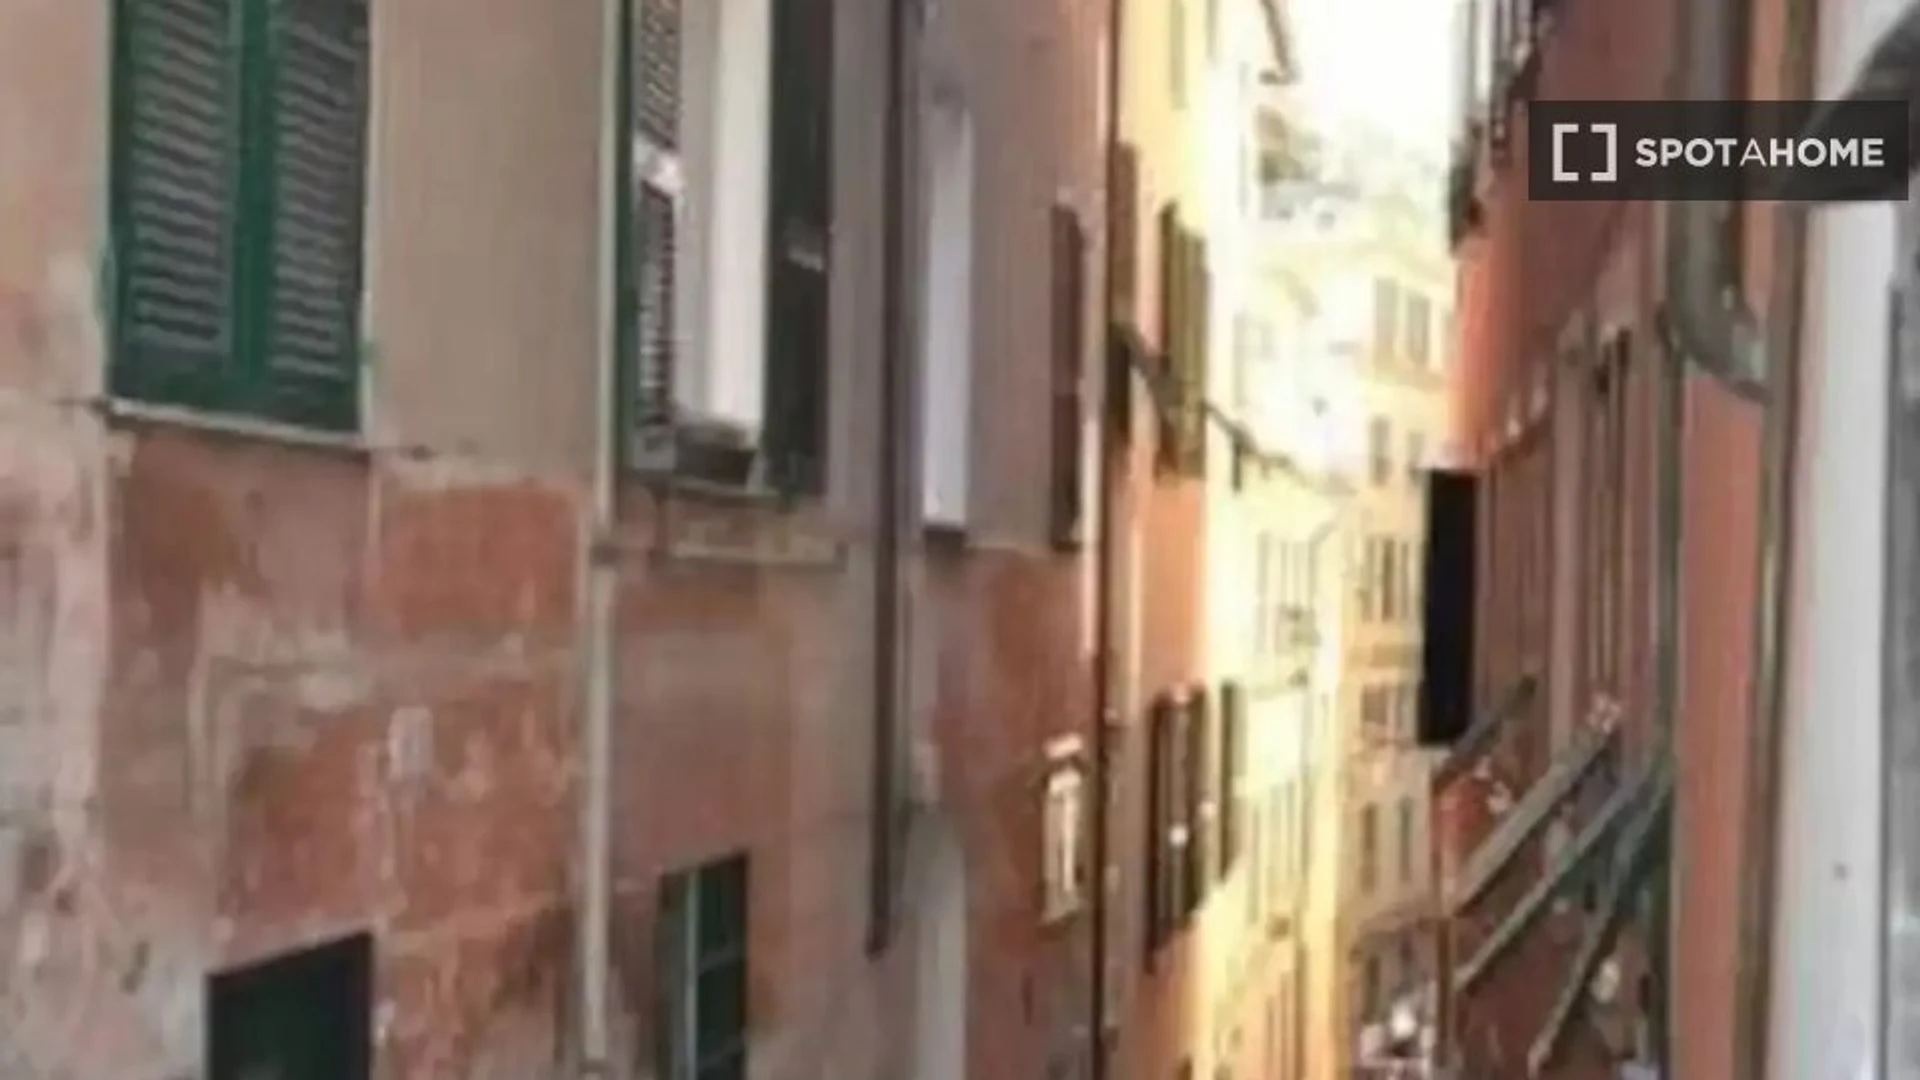 Logement avec 3 chambres à Gênes